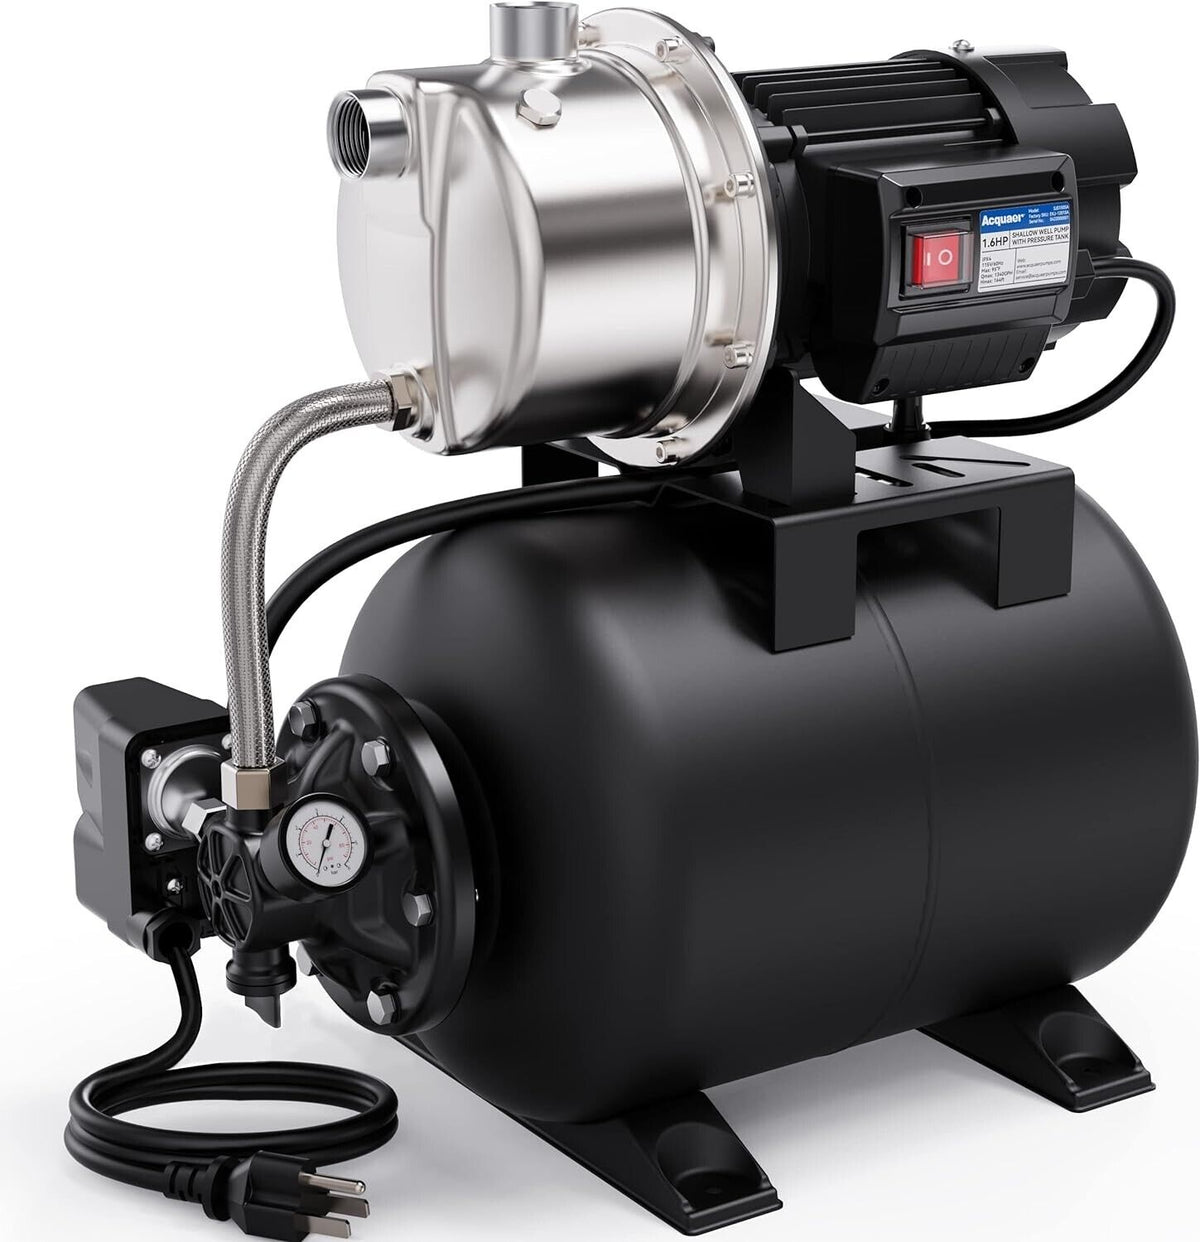 Acquaer 1.6HP Shallow Well Pump with Pressure Tank SJS150SA